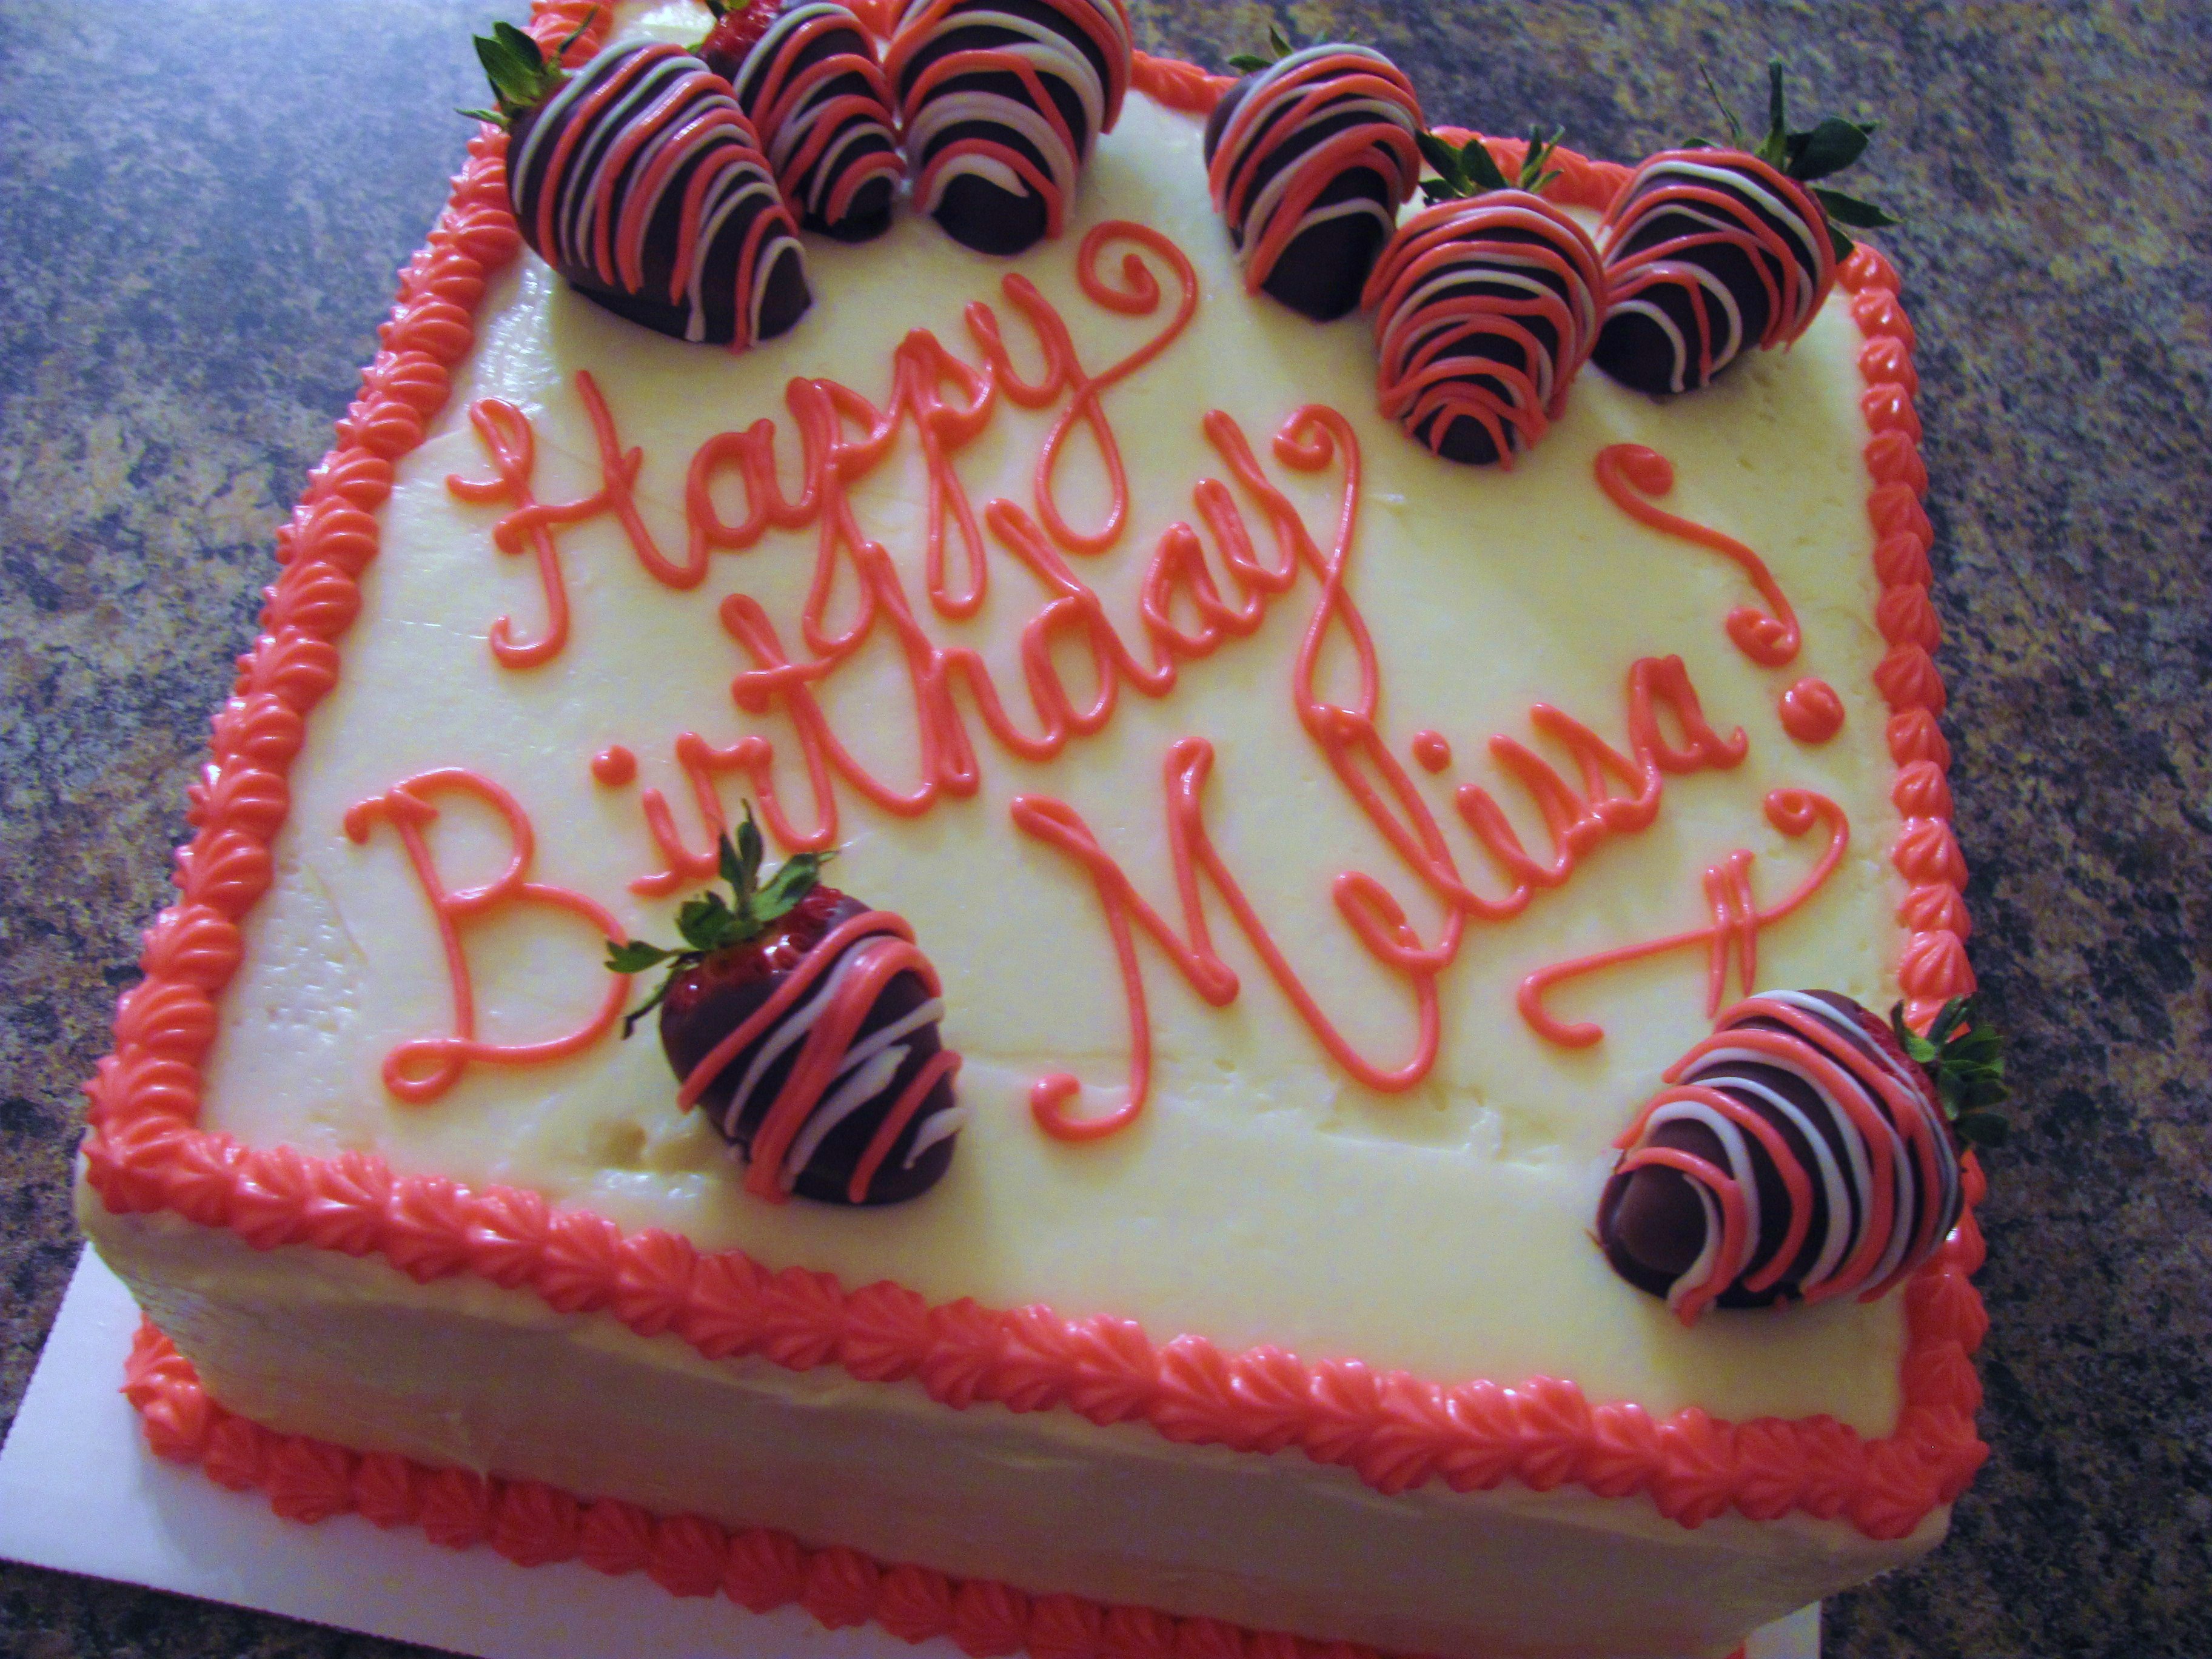 Happy Birthday Melissa Cake.